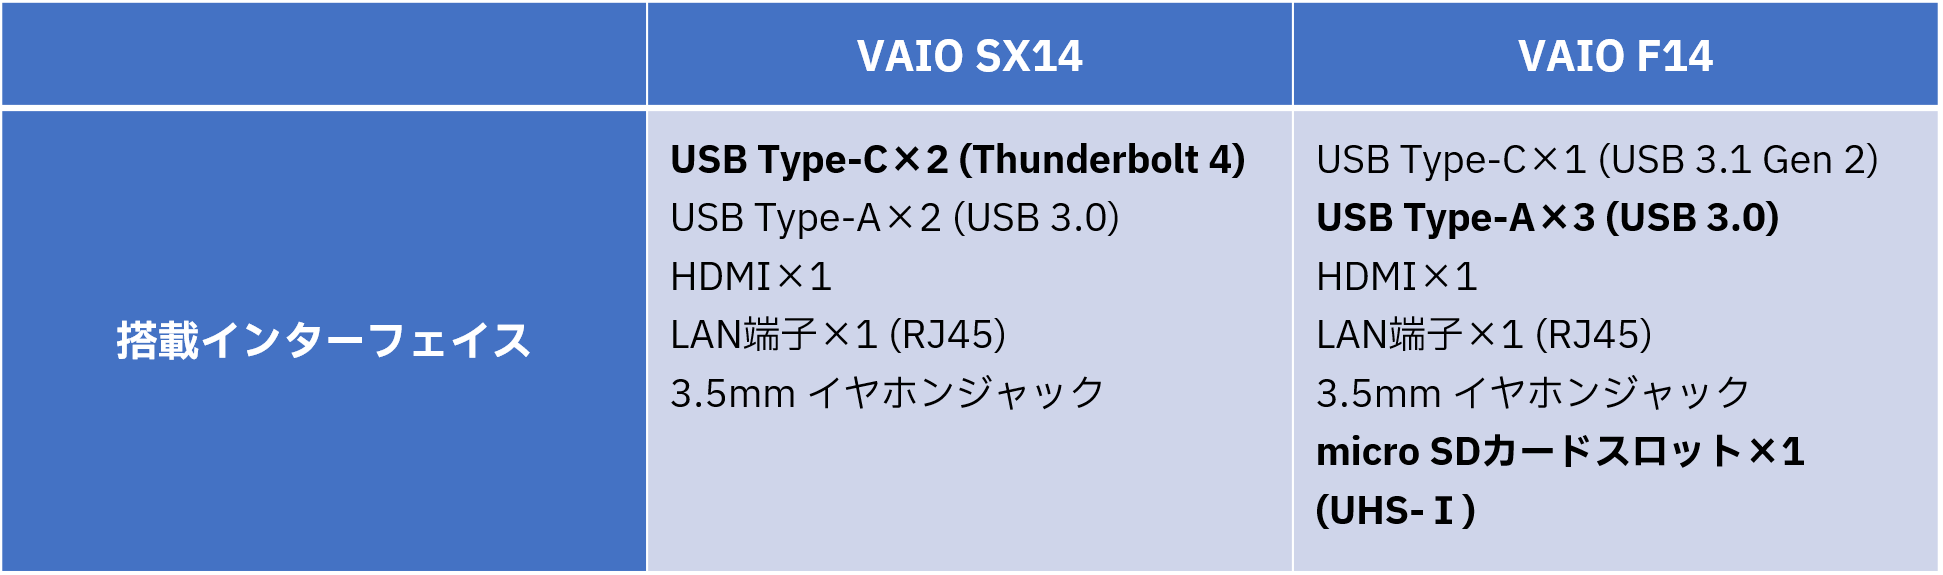 VAIO SX14とVAIO F14に搭載されているインターフェイス